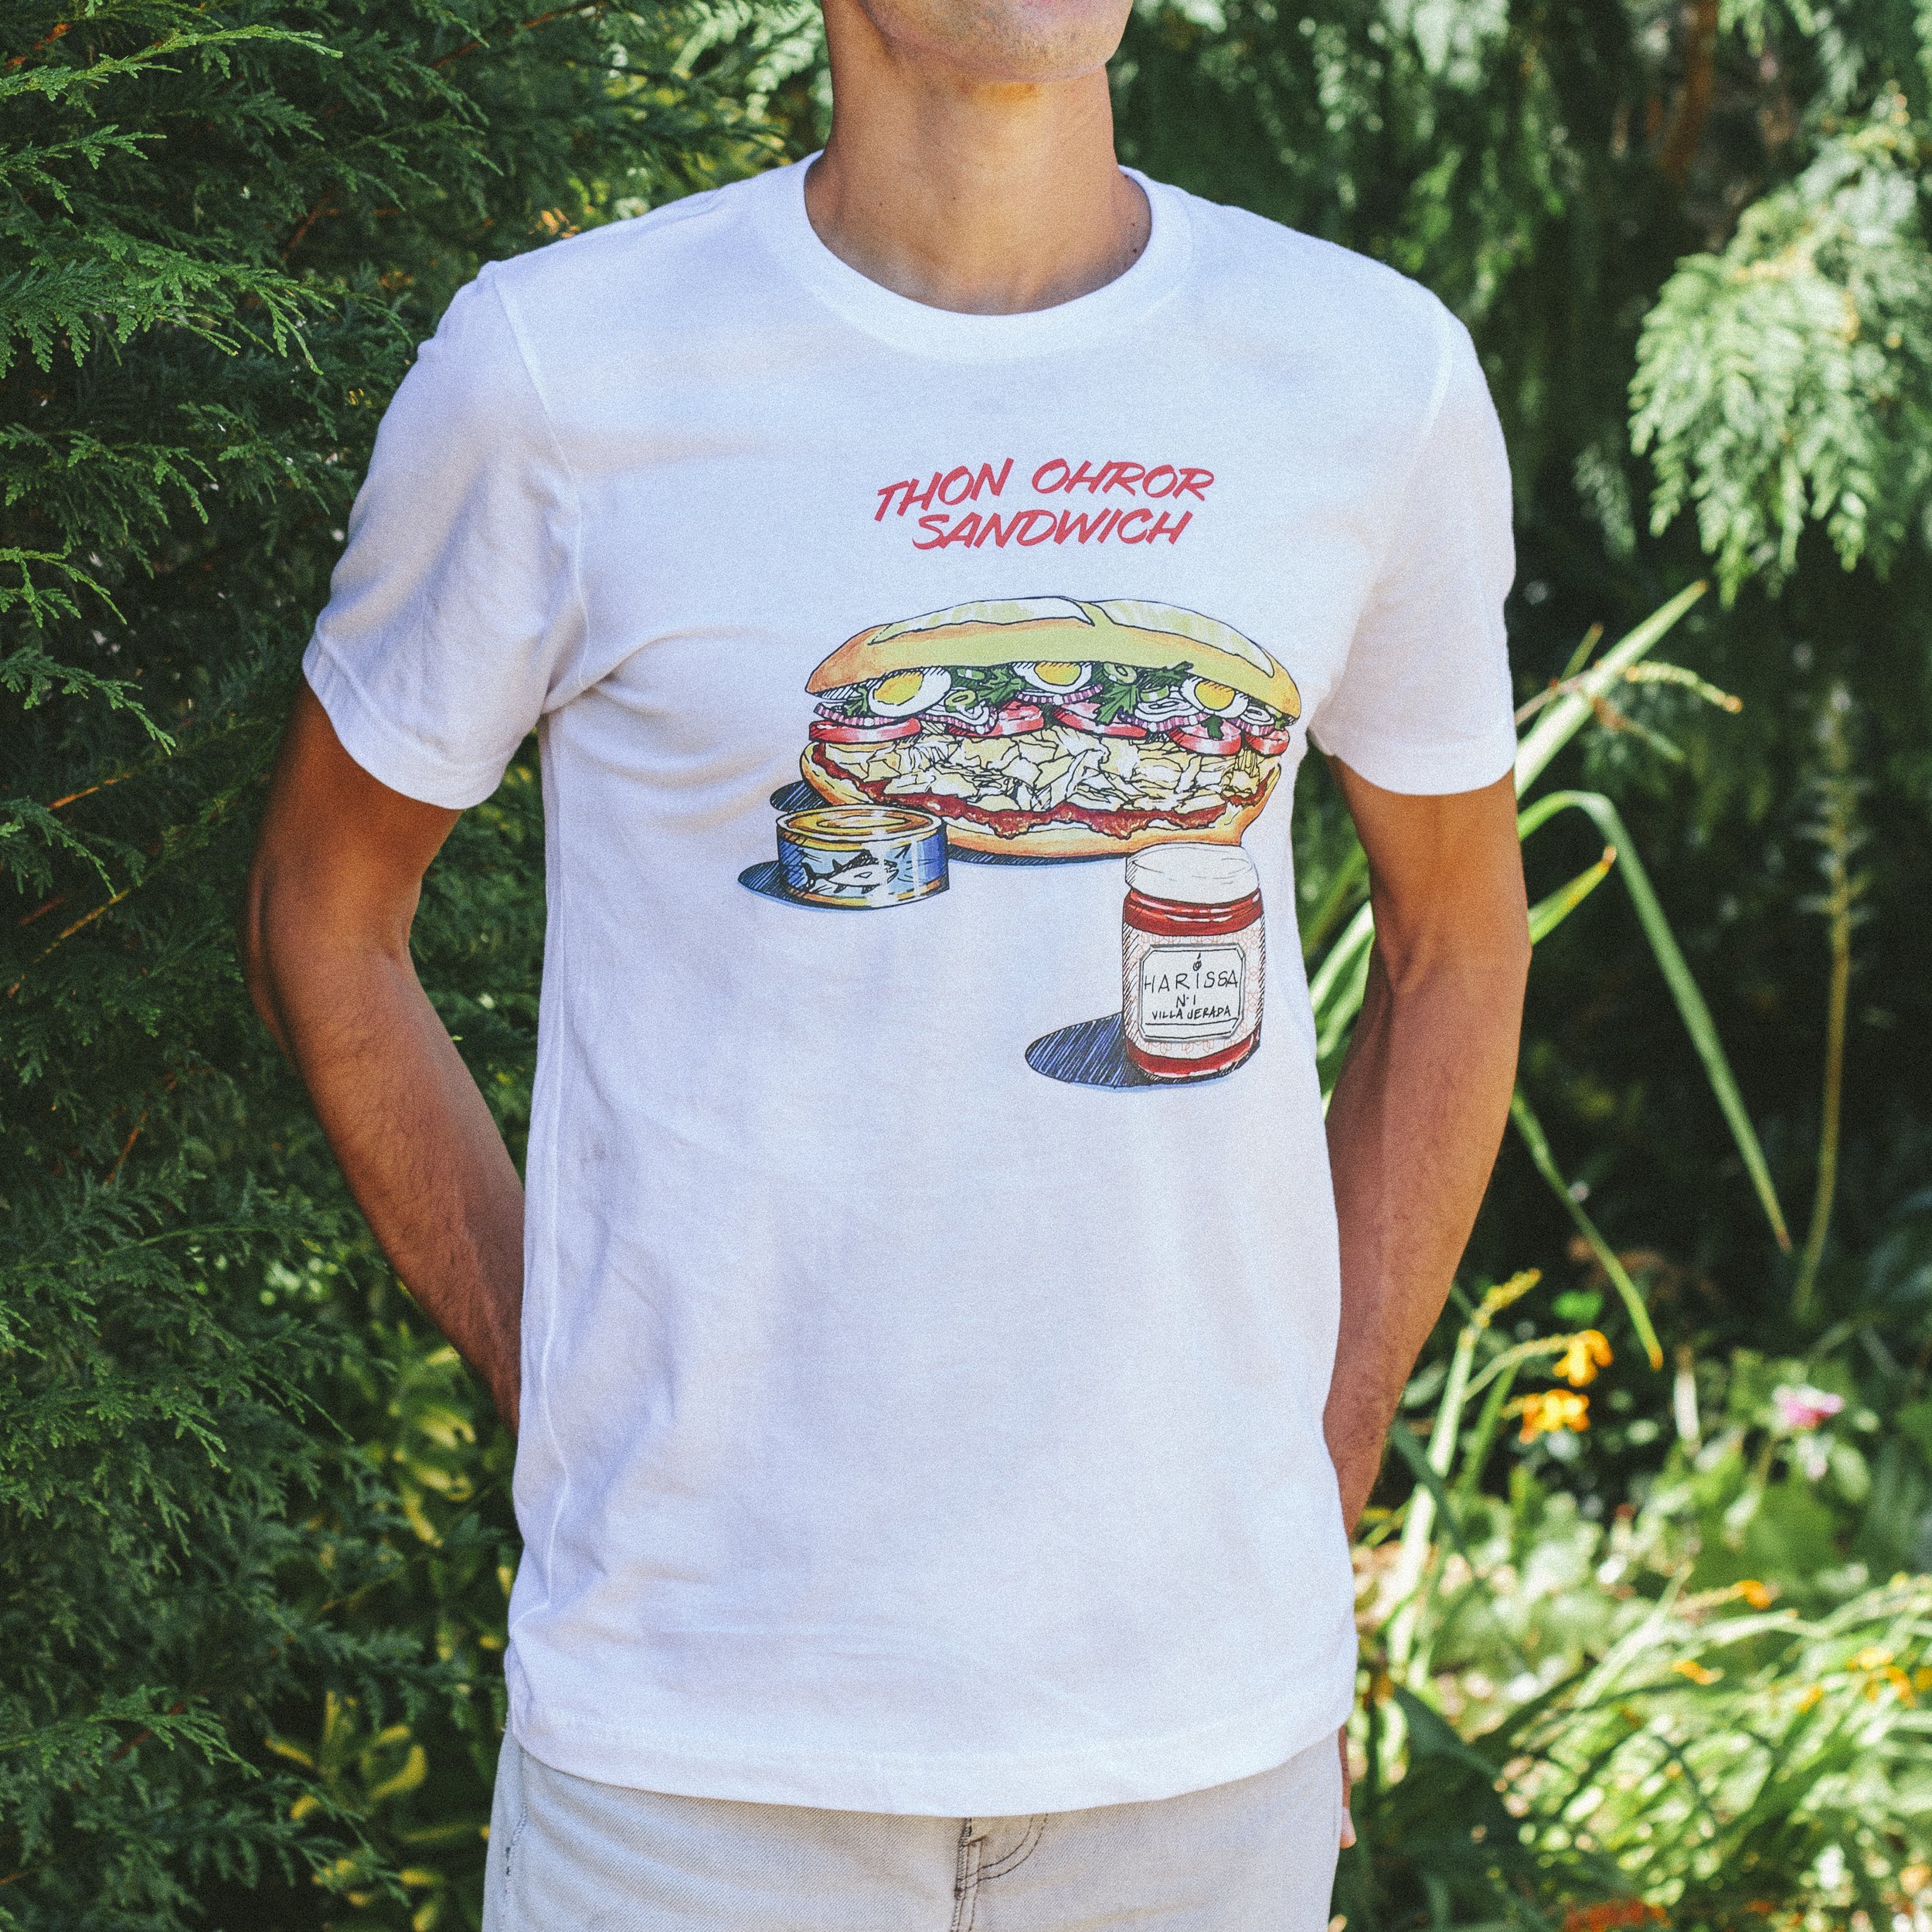 Moroccan Tuna Sandwich T-shirt (White) - $22